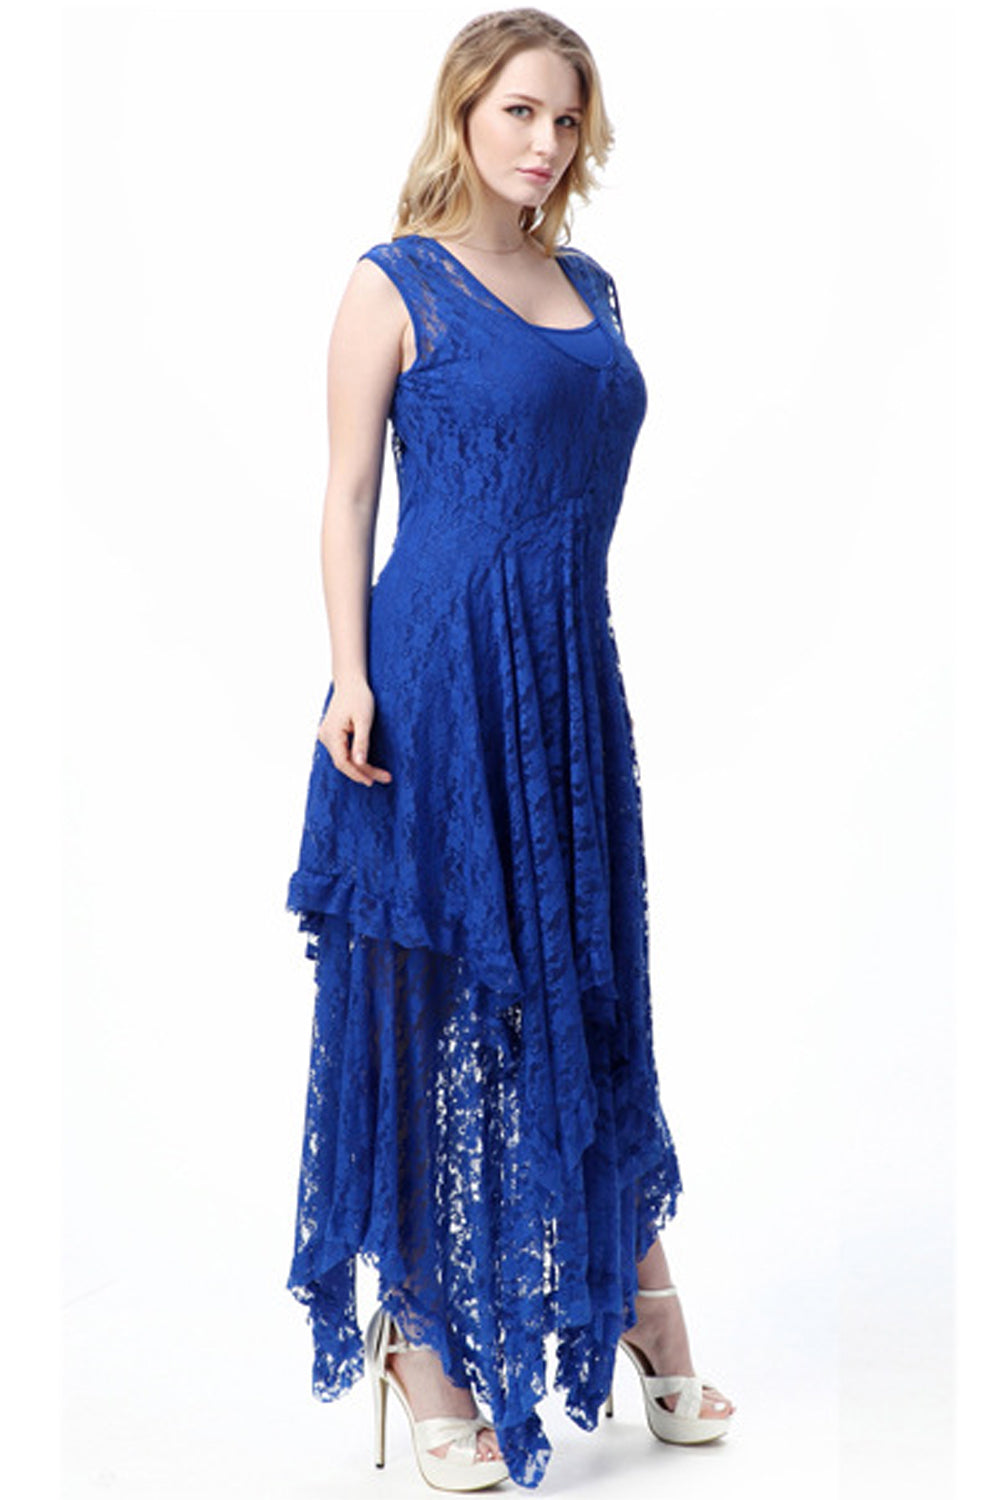 Ketty More Women Plus Size Sleeveless Irregular Skirt Lace Courtship Slip Dress-KMWD378